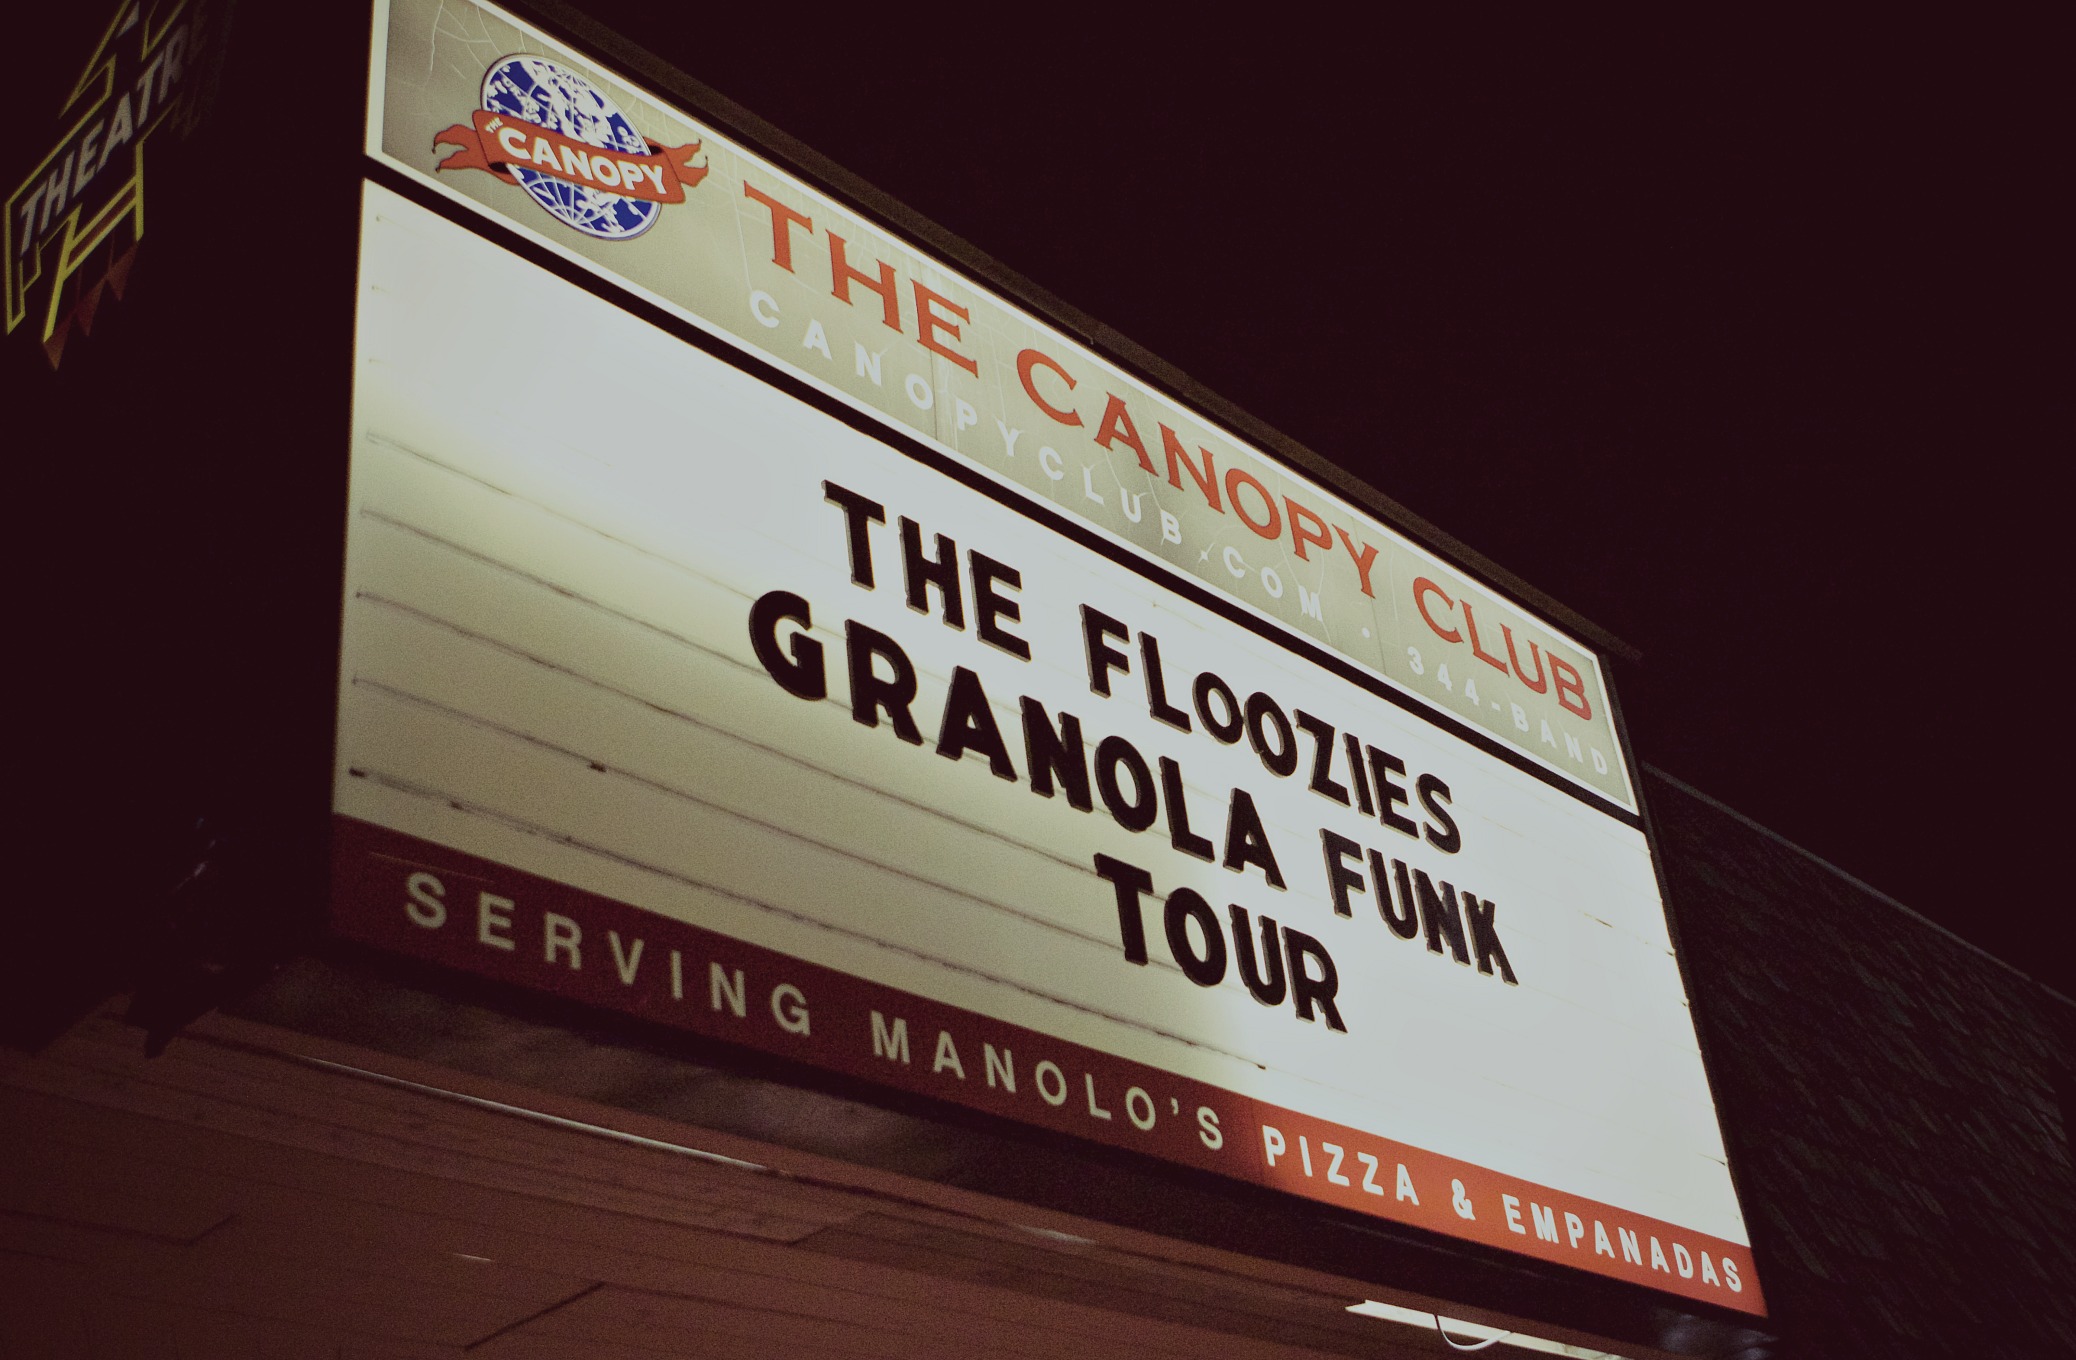 [CONCERT RECAP] The Floozies Kick Off Their Granola Jones Tour